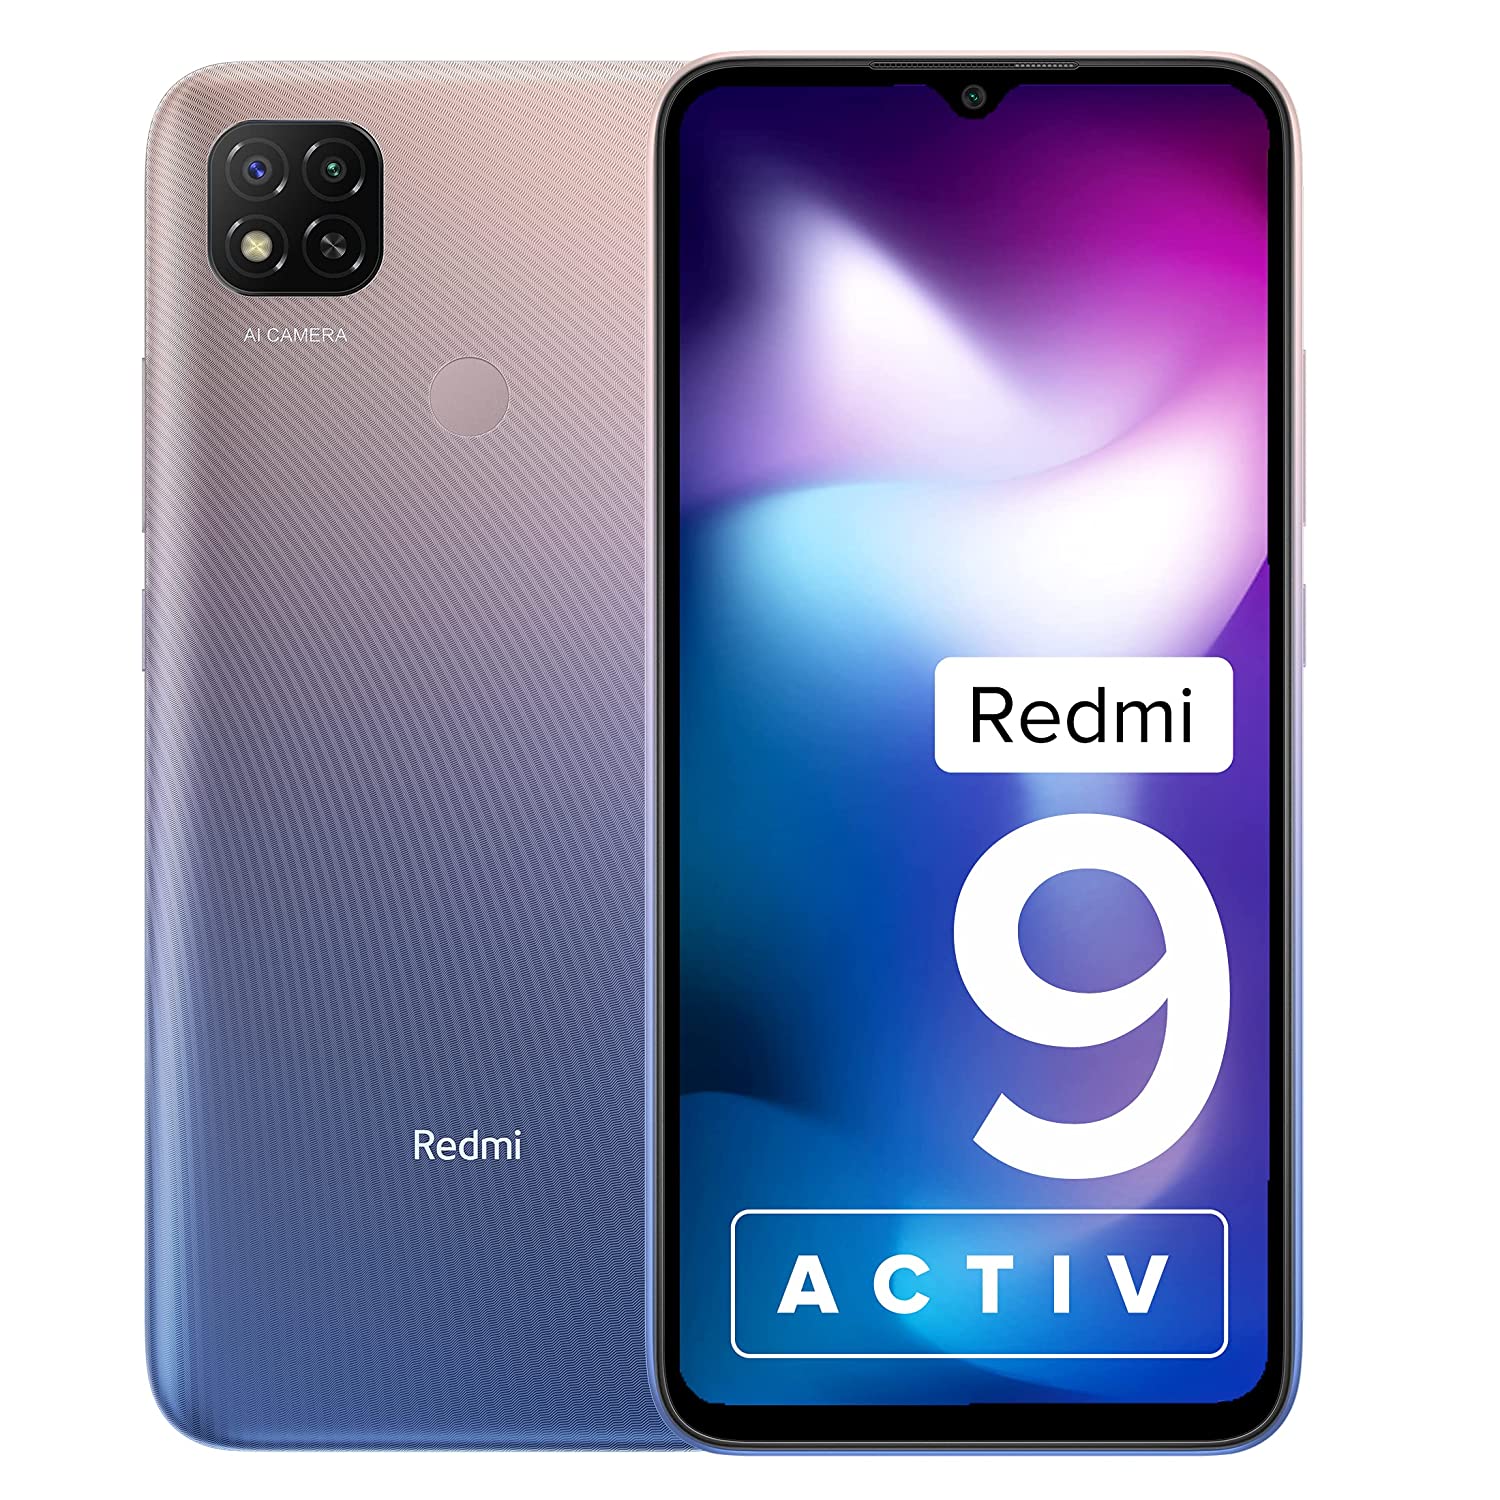 REDMI 9 Activ (Metallic Purple, 64 GB)  (4 GB RAM)